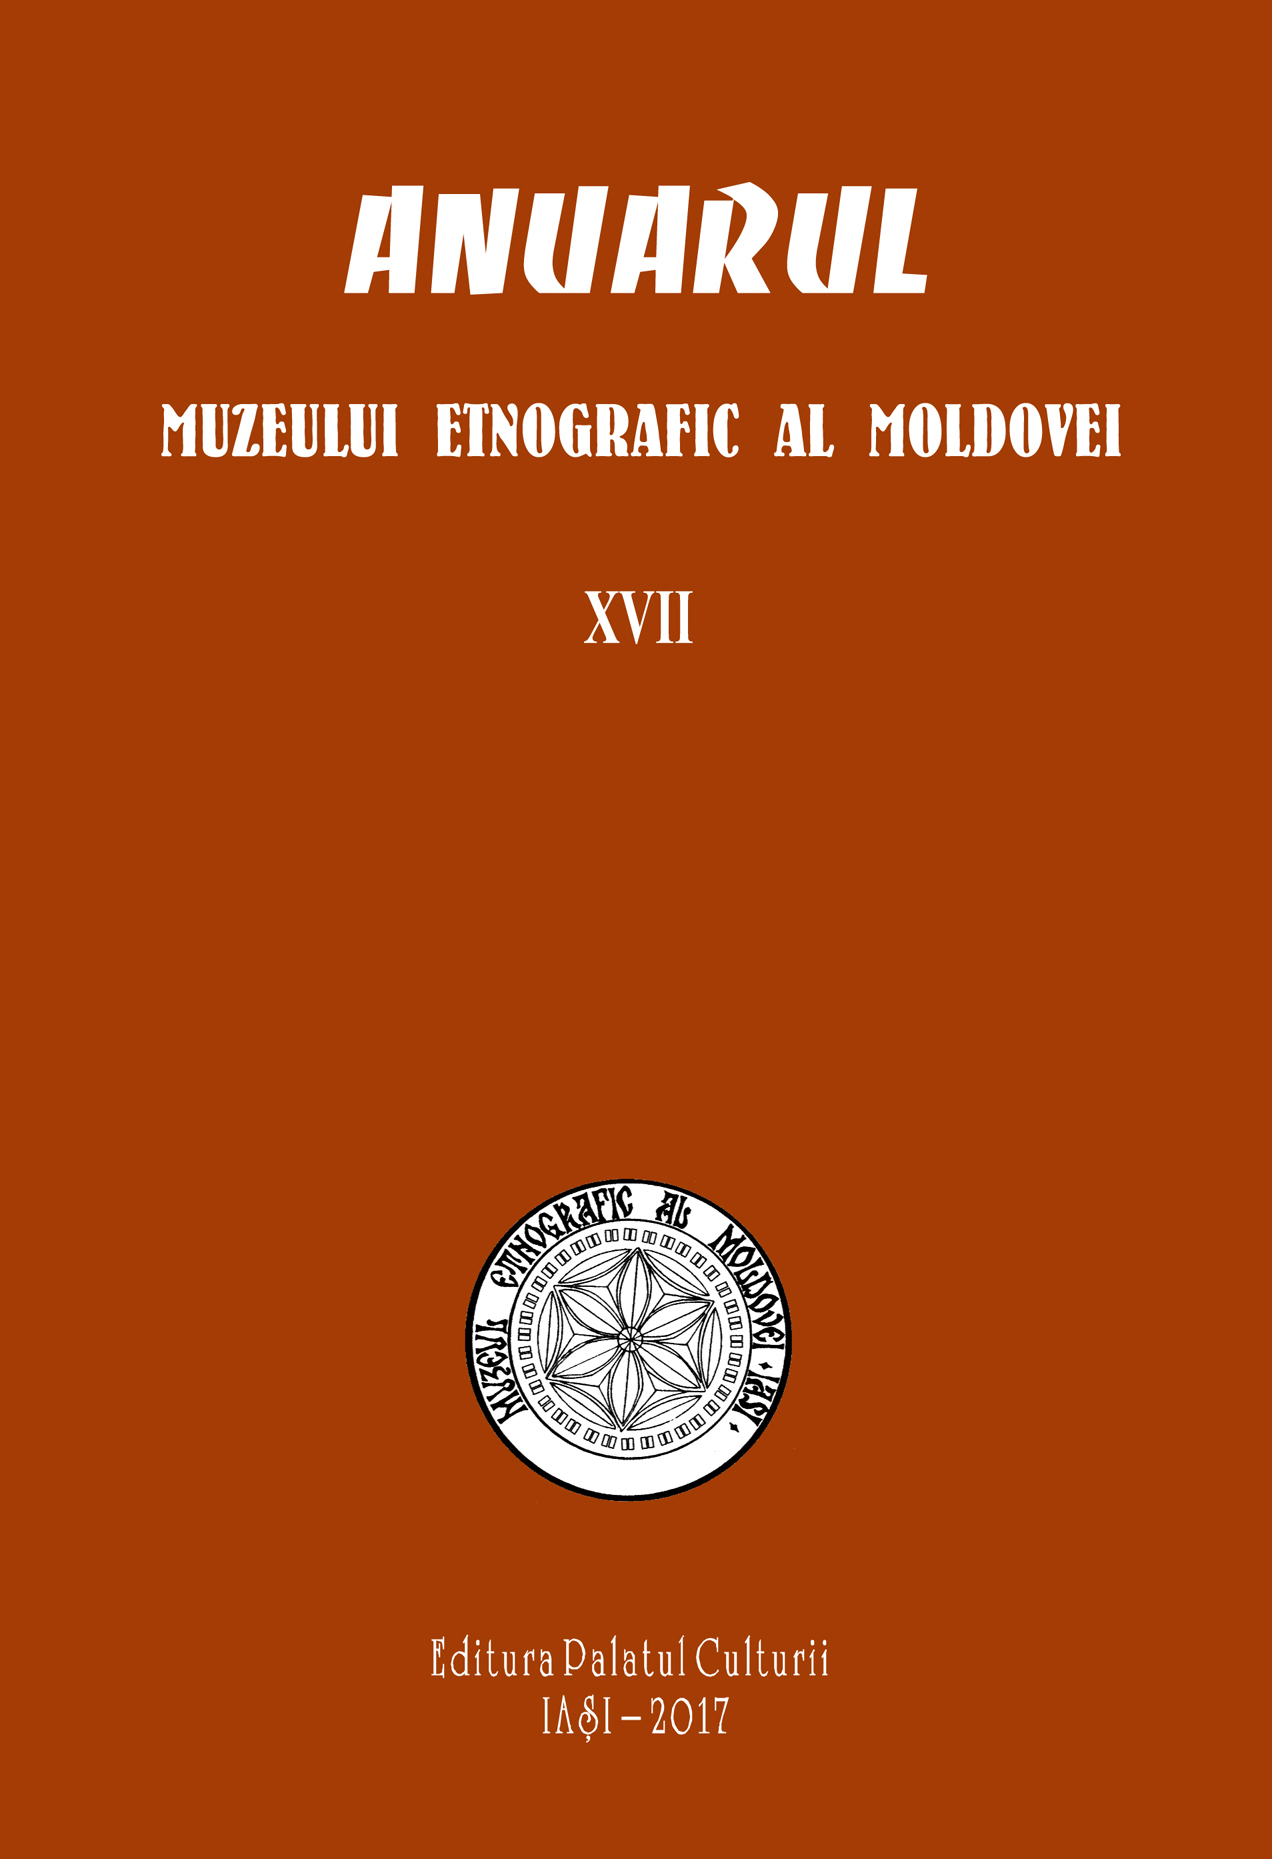 Researches of 1938-1939 undertaken by 
Ştefania Cristescu-Golopenţia Cover Image